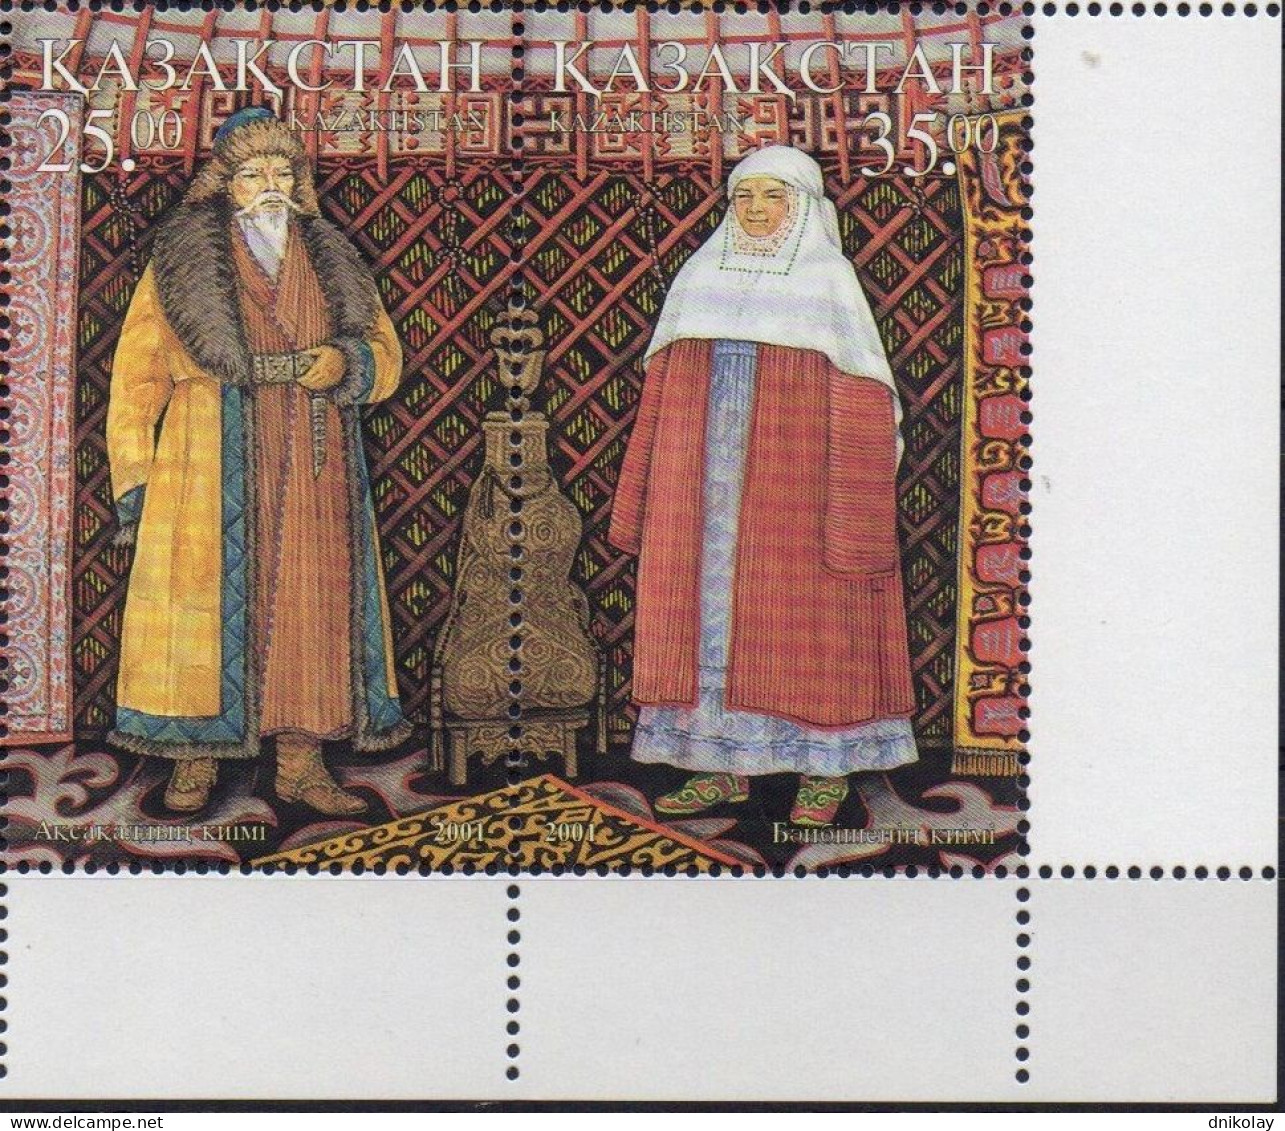 2001 362 Kazakhstan Traditional Costumes MNH - Kazakistan